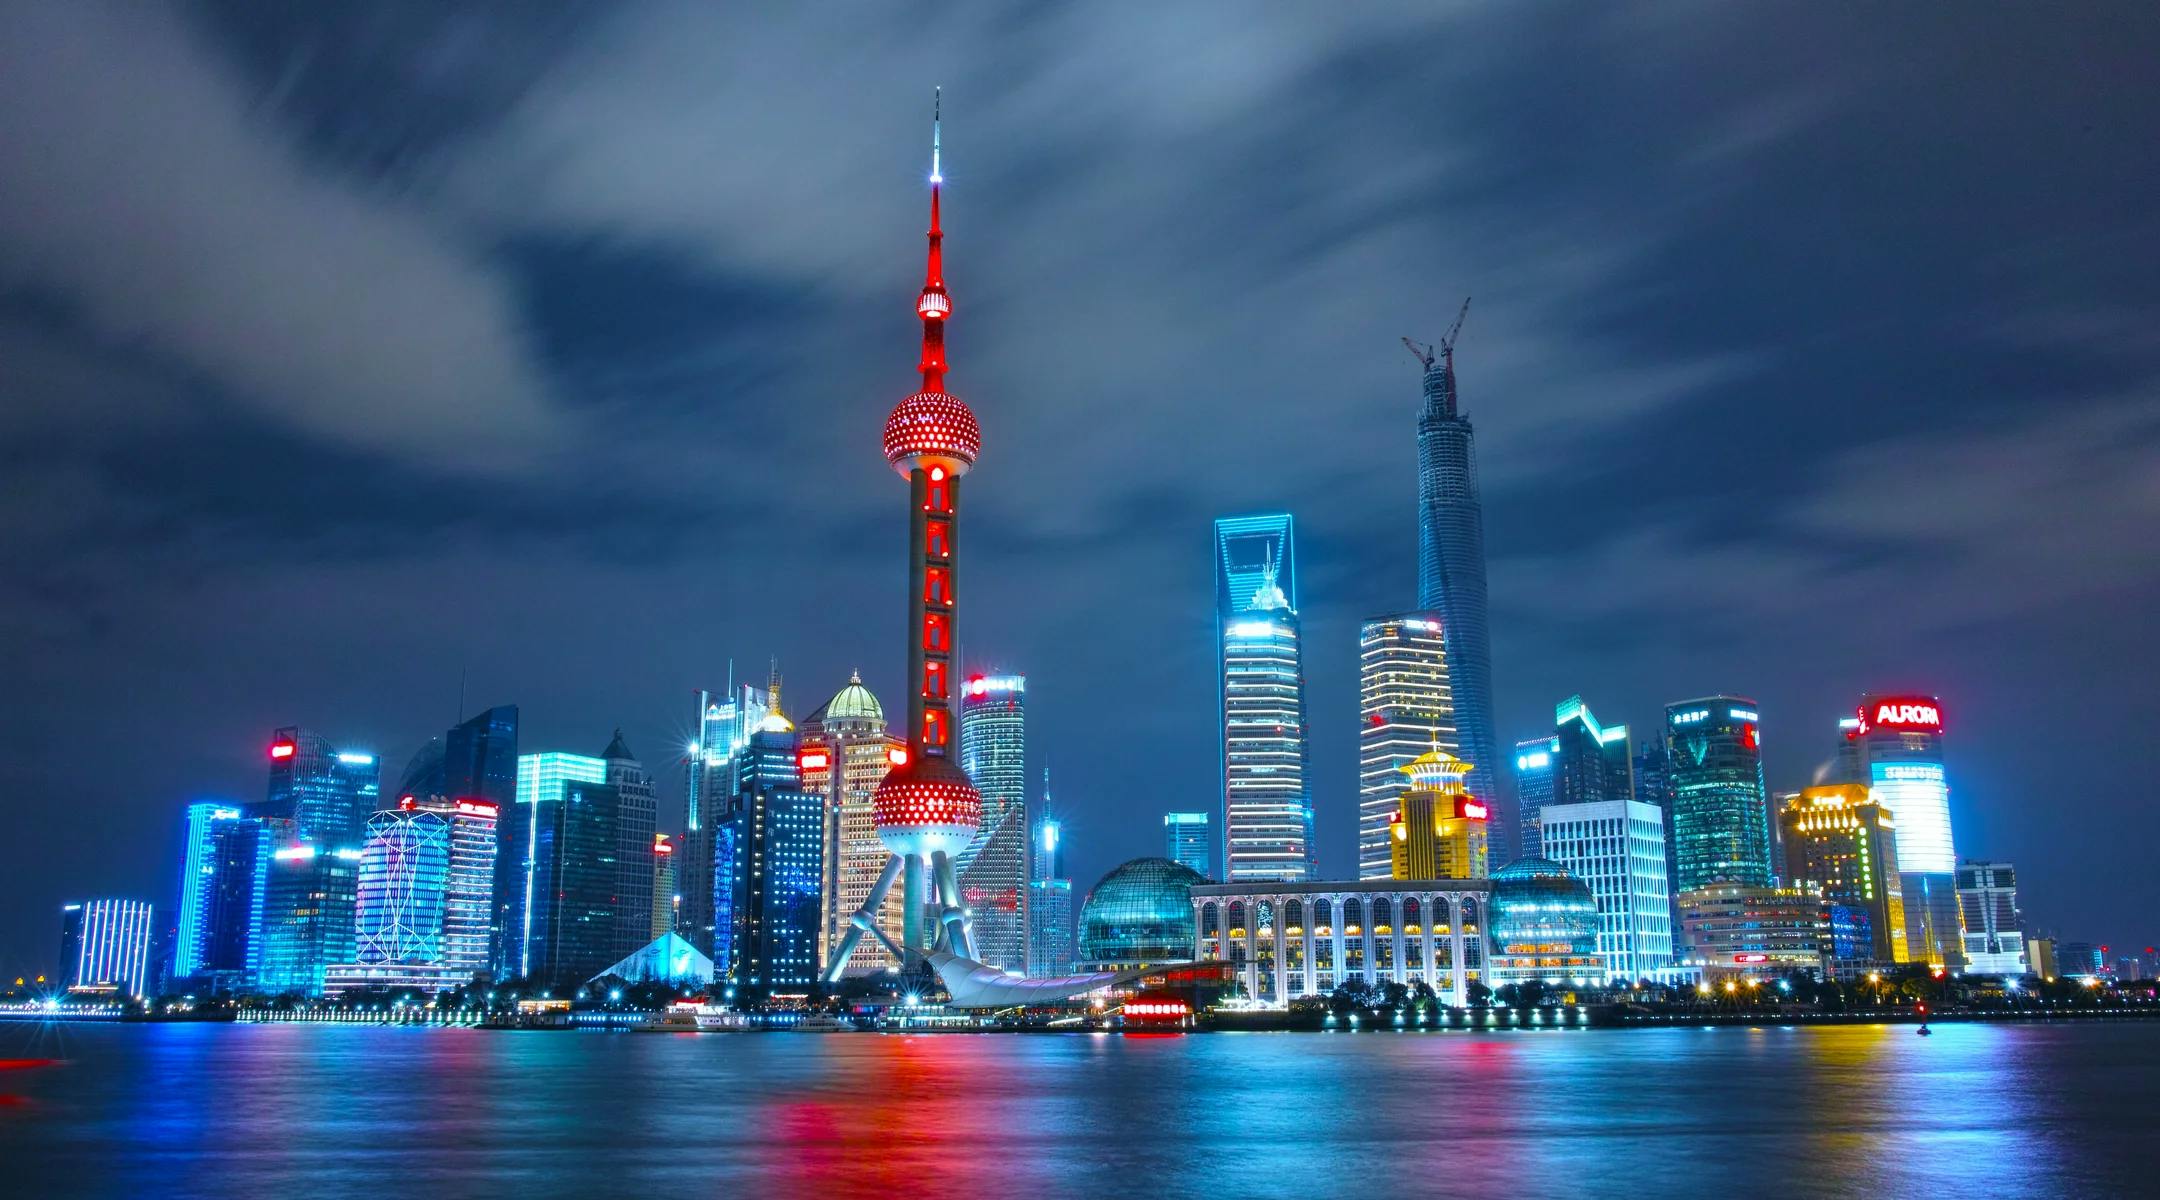 Kina skyline i nattlys